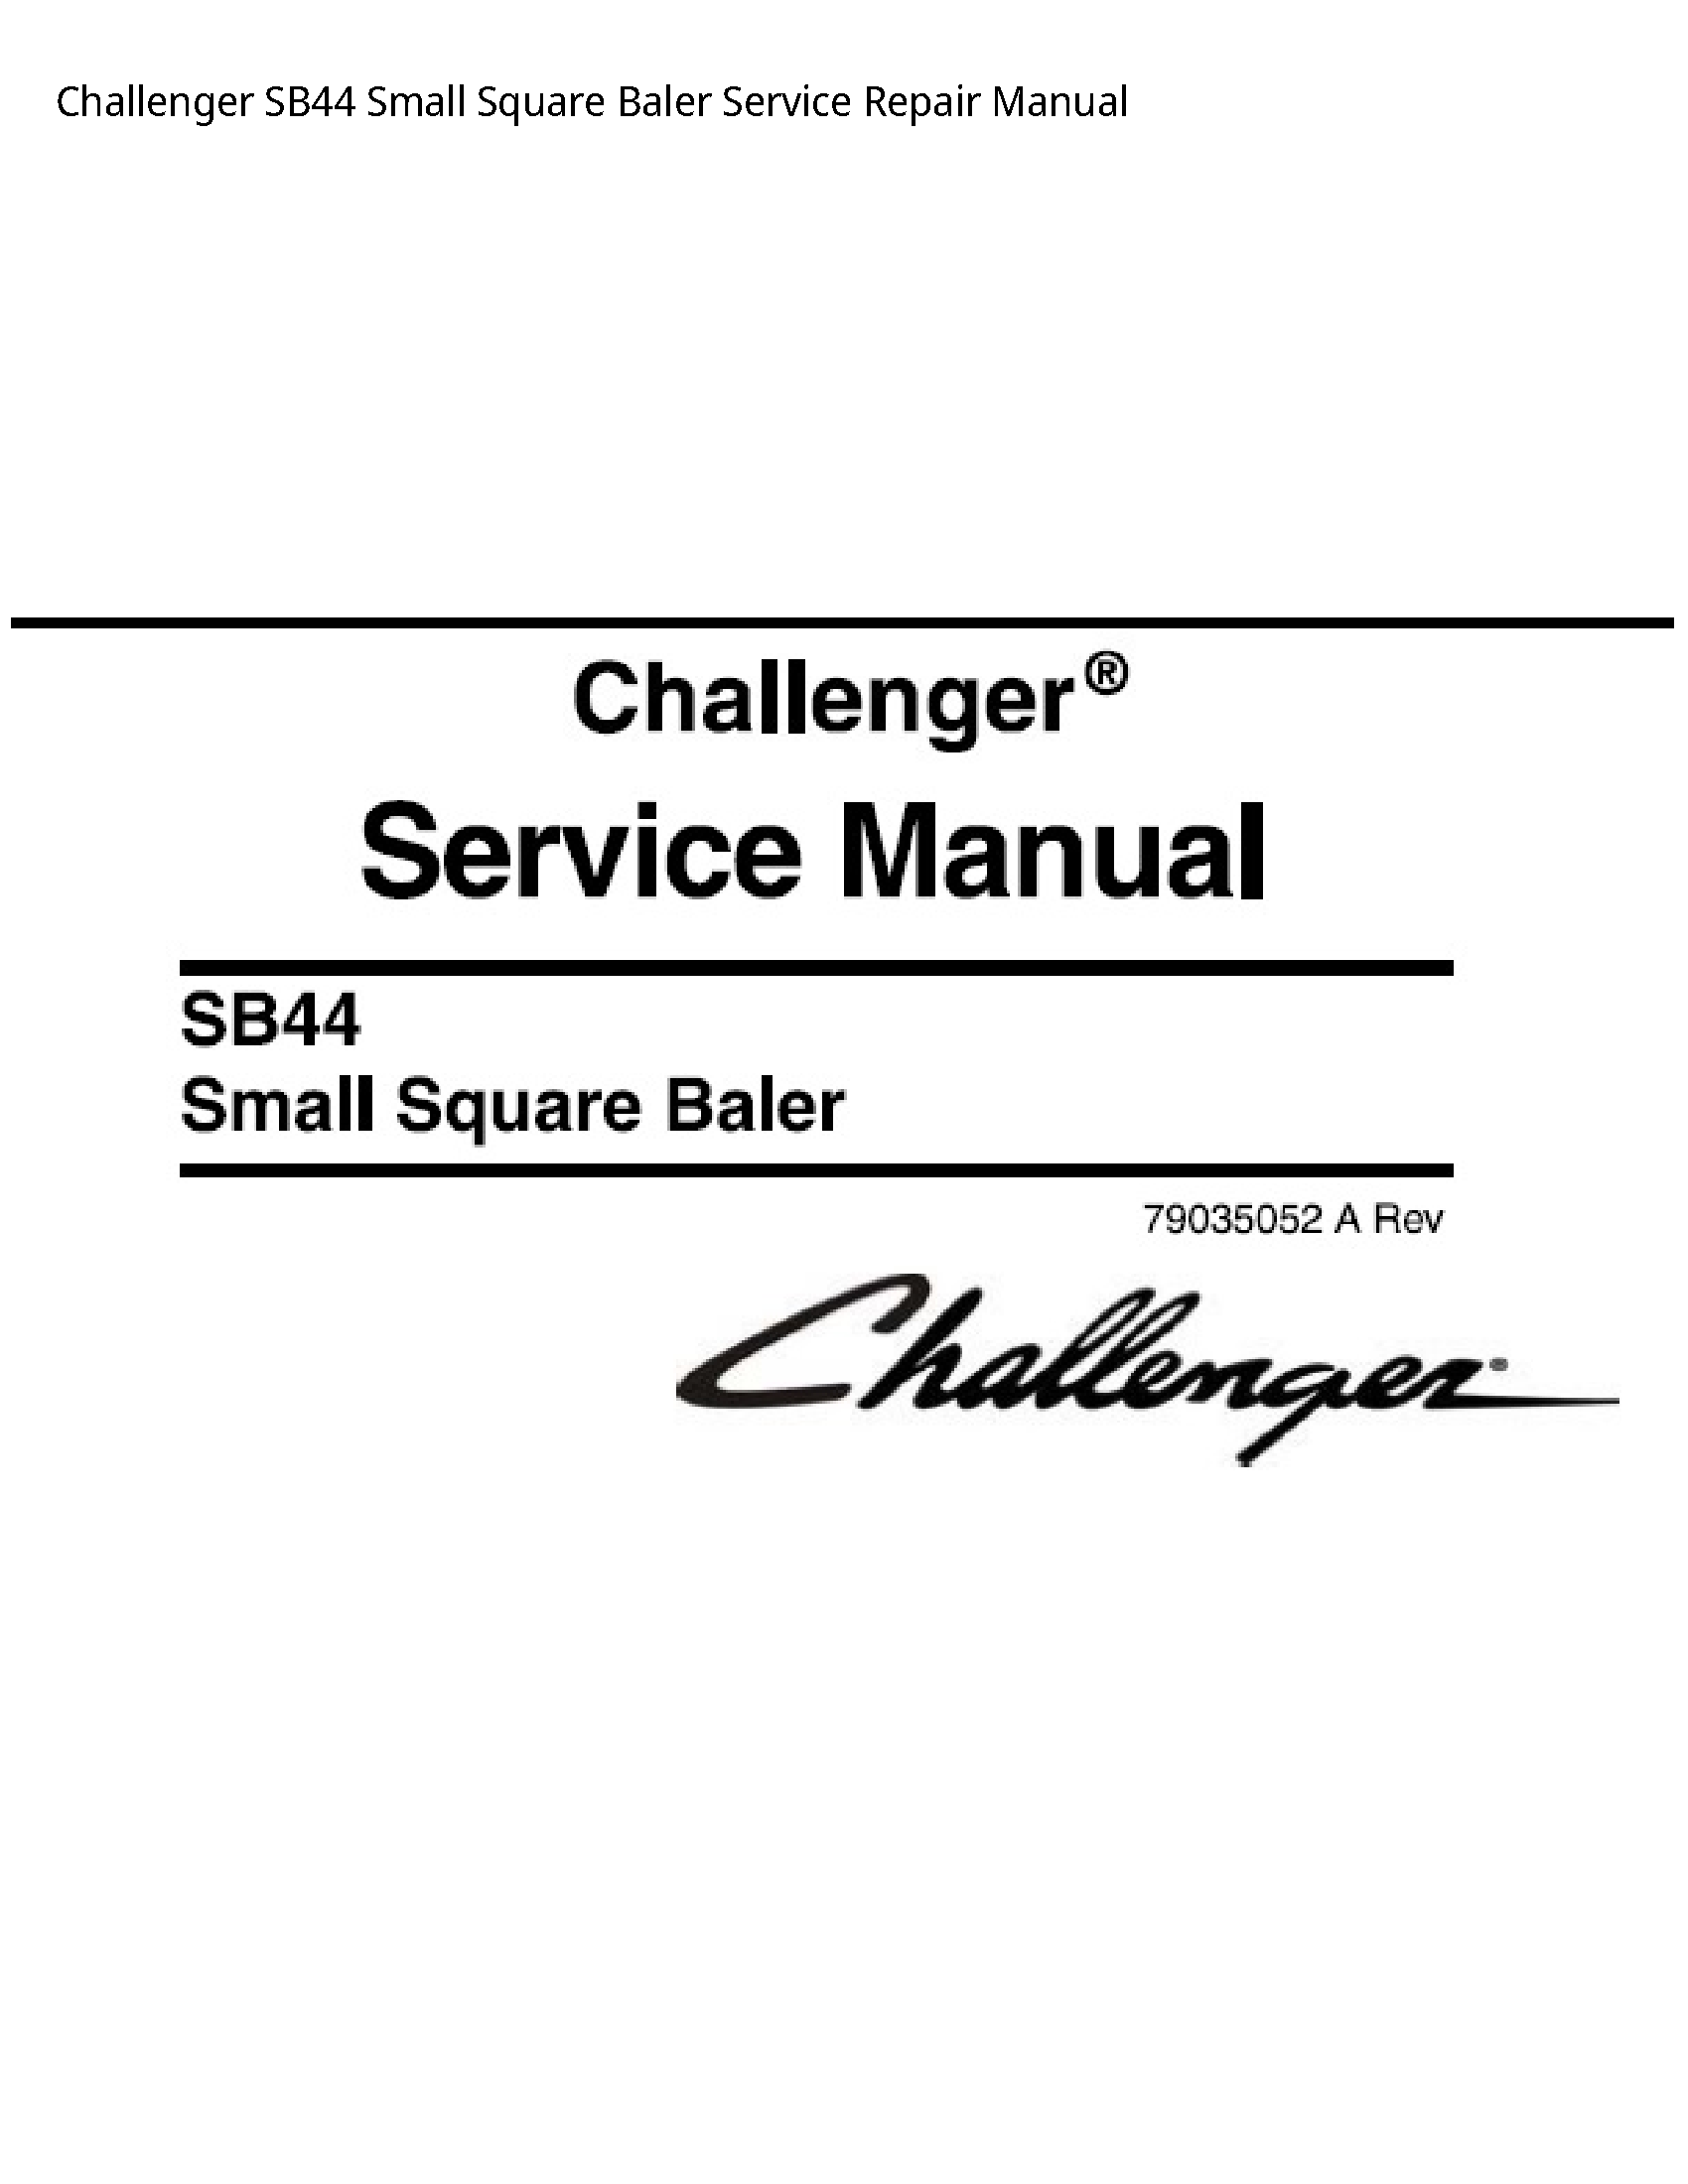 Challenger SB44 Small Square Baler manual